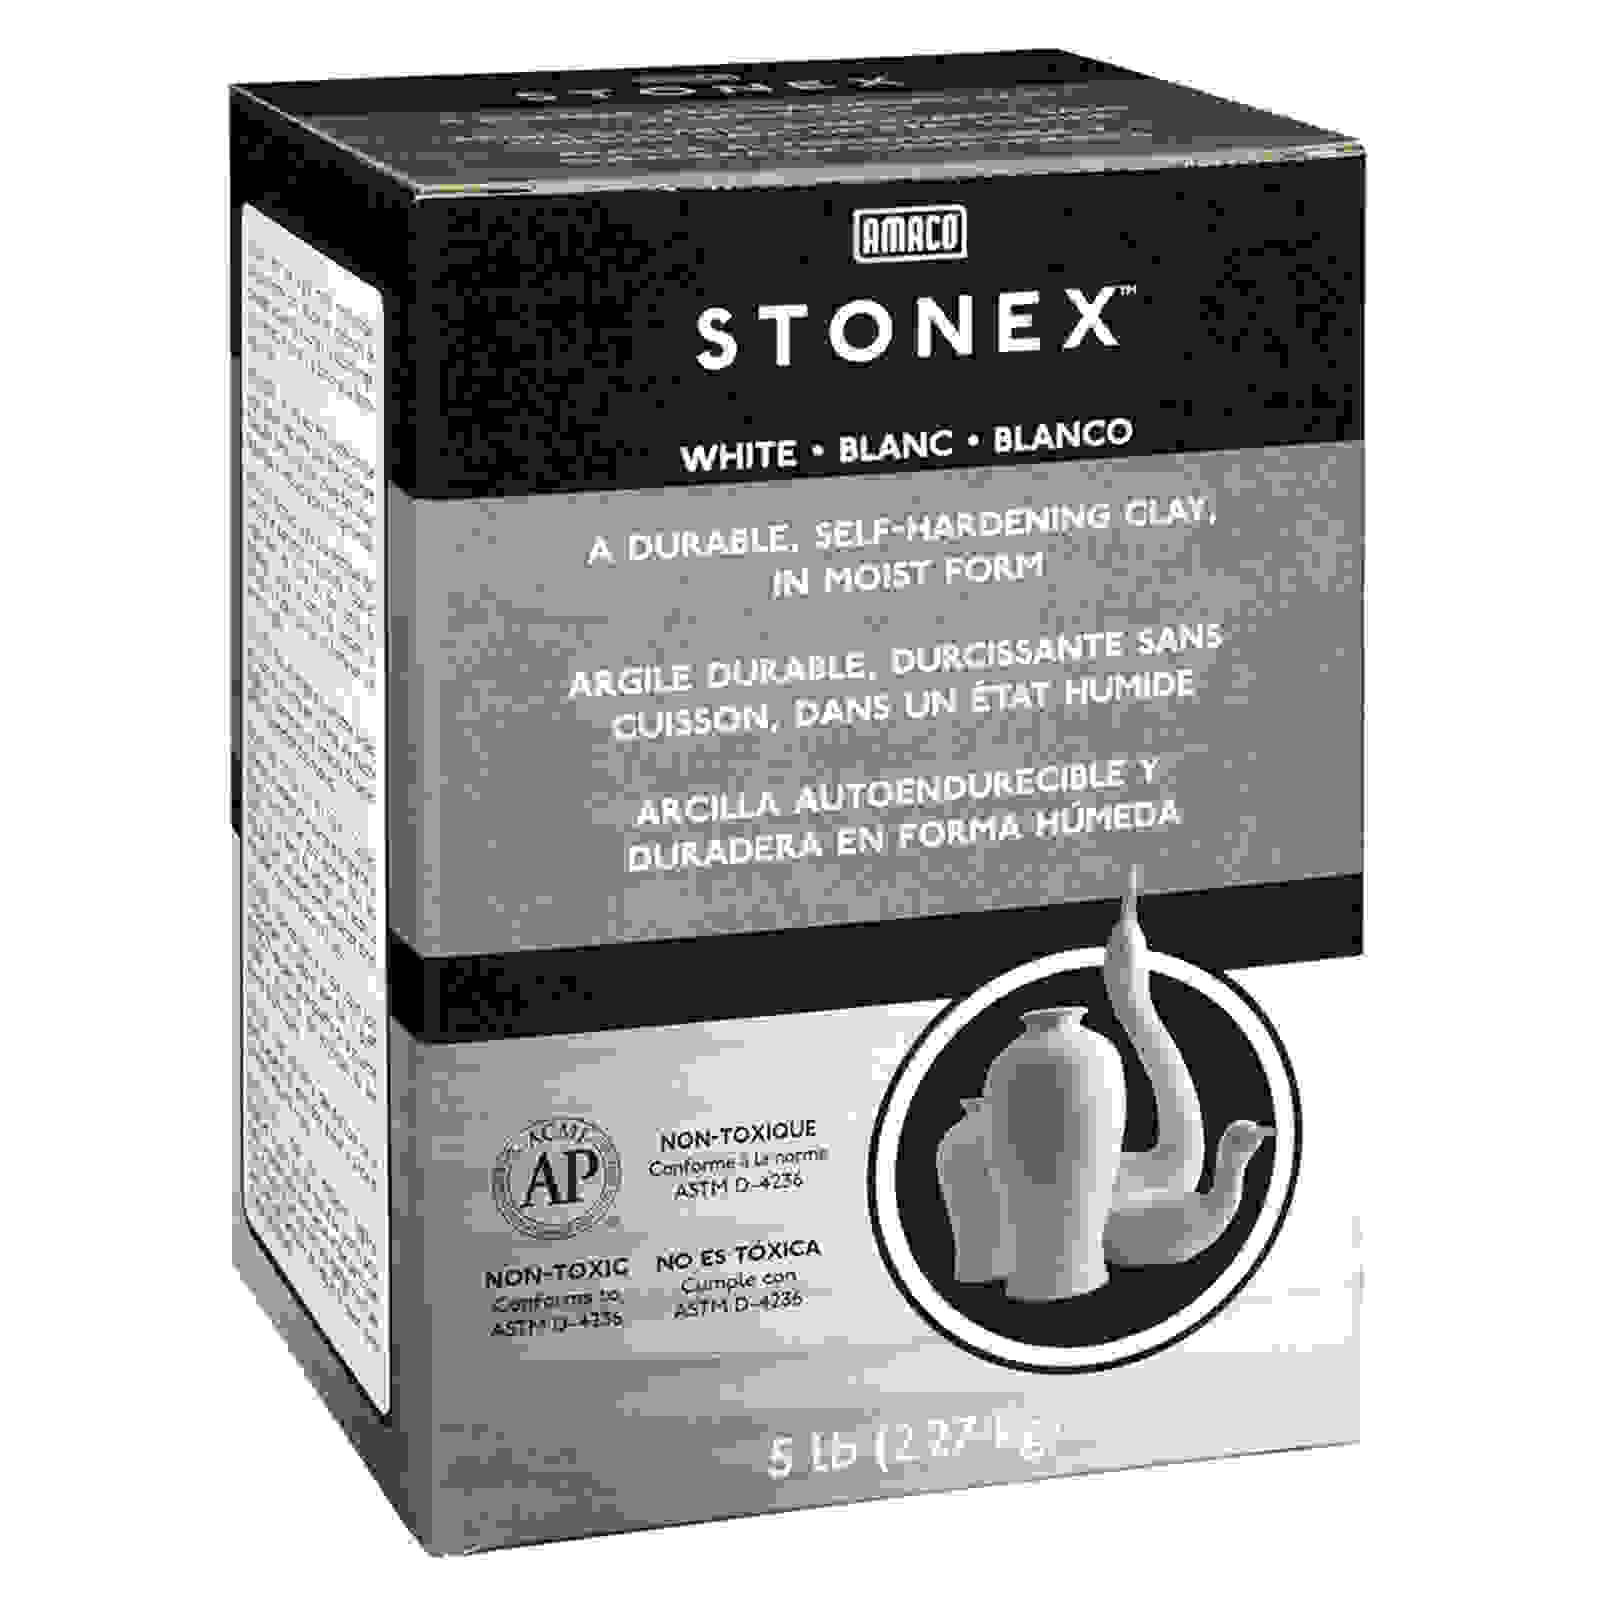 Stonex Self-Hardening Clay, White, 5 lbs